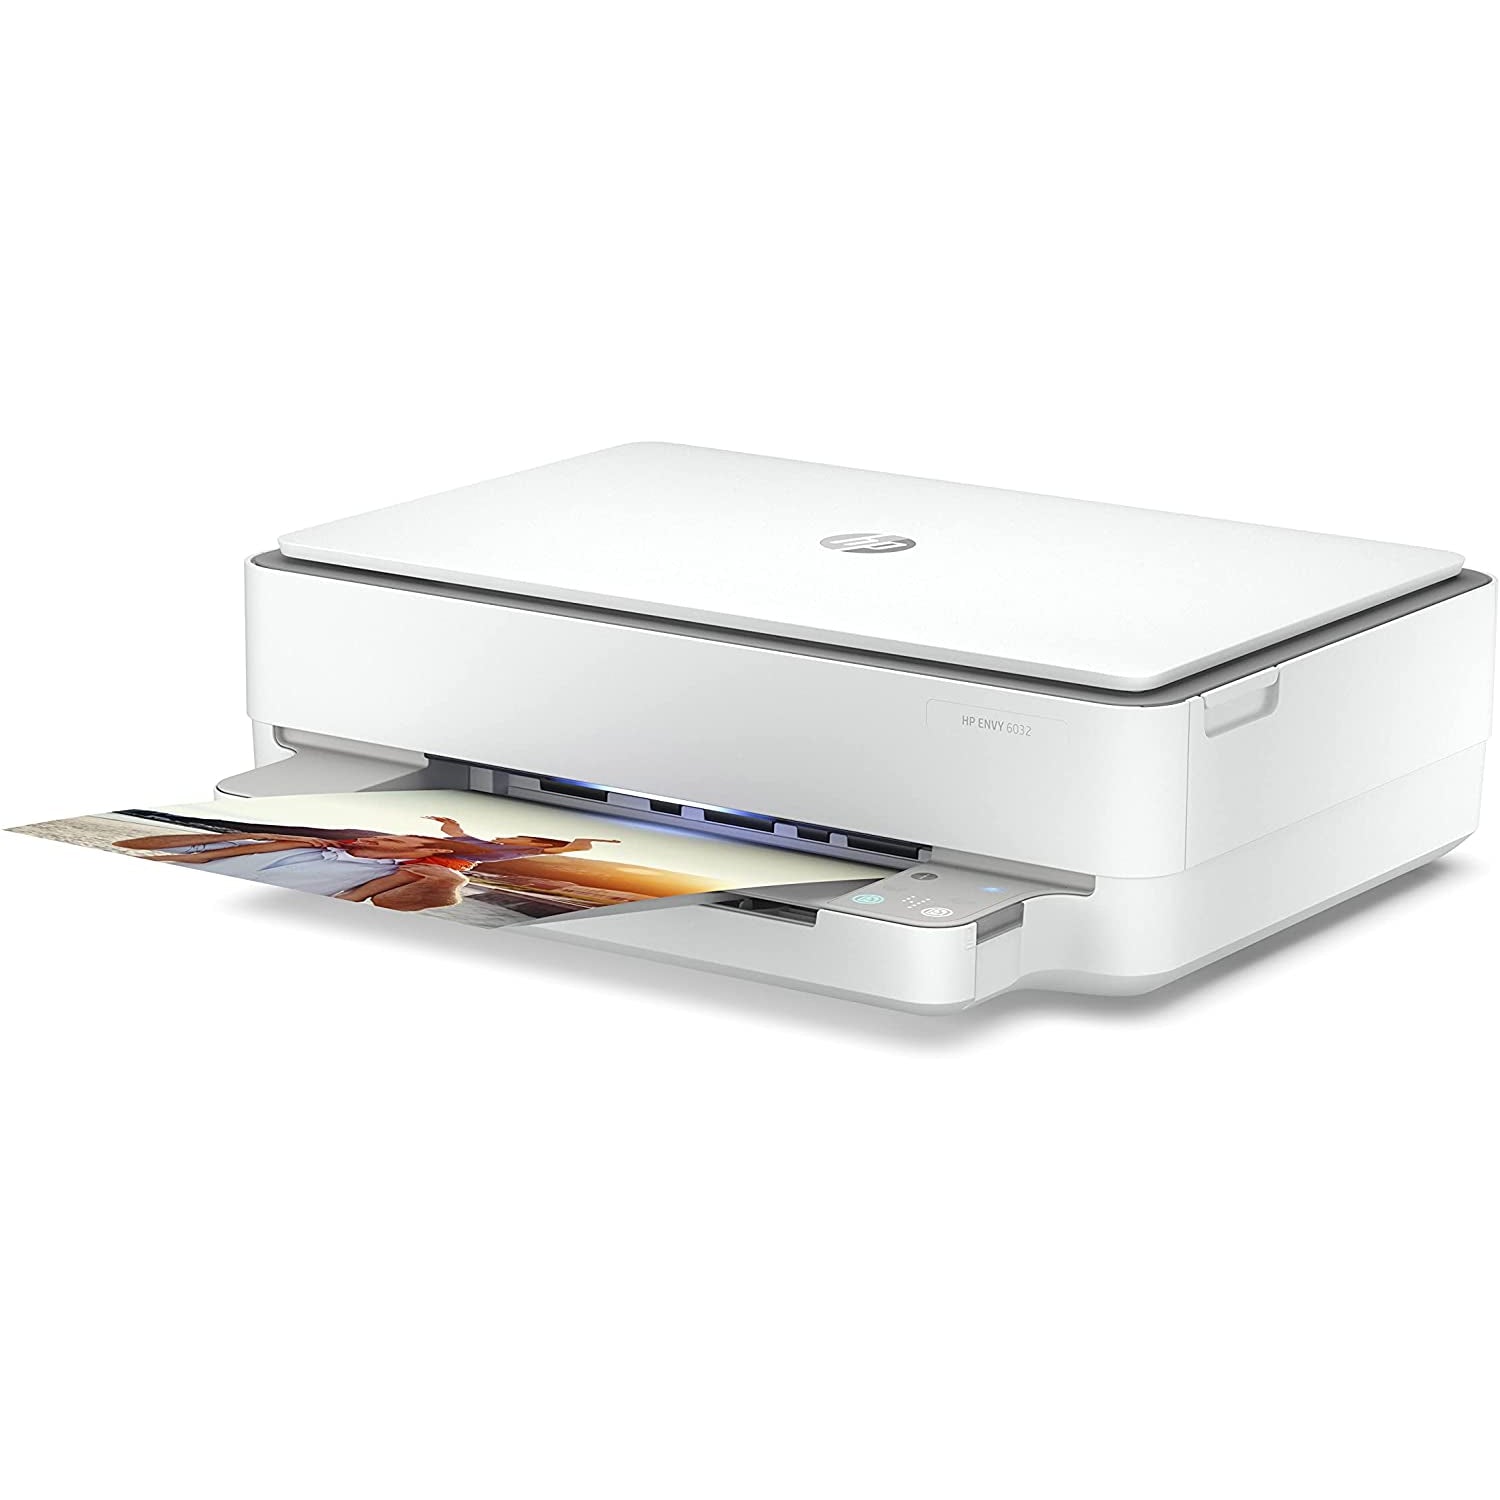 HP Envy 6032 All-in-One Wireless Inkjet Printer, White - New